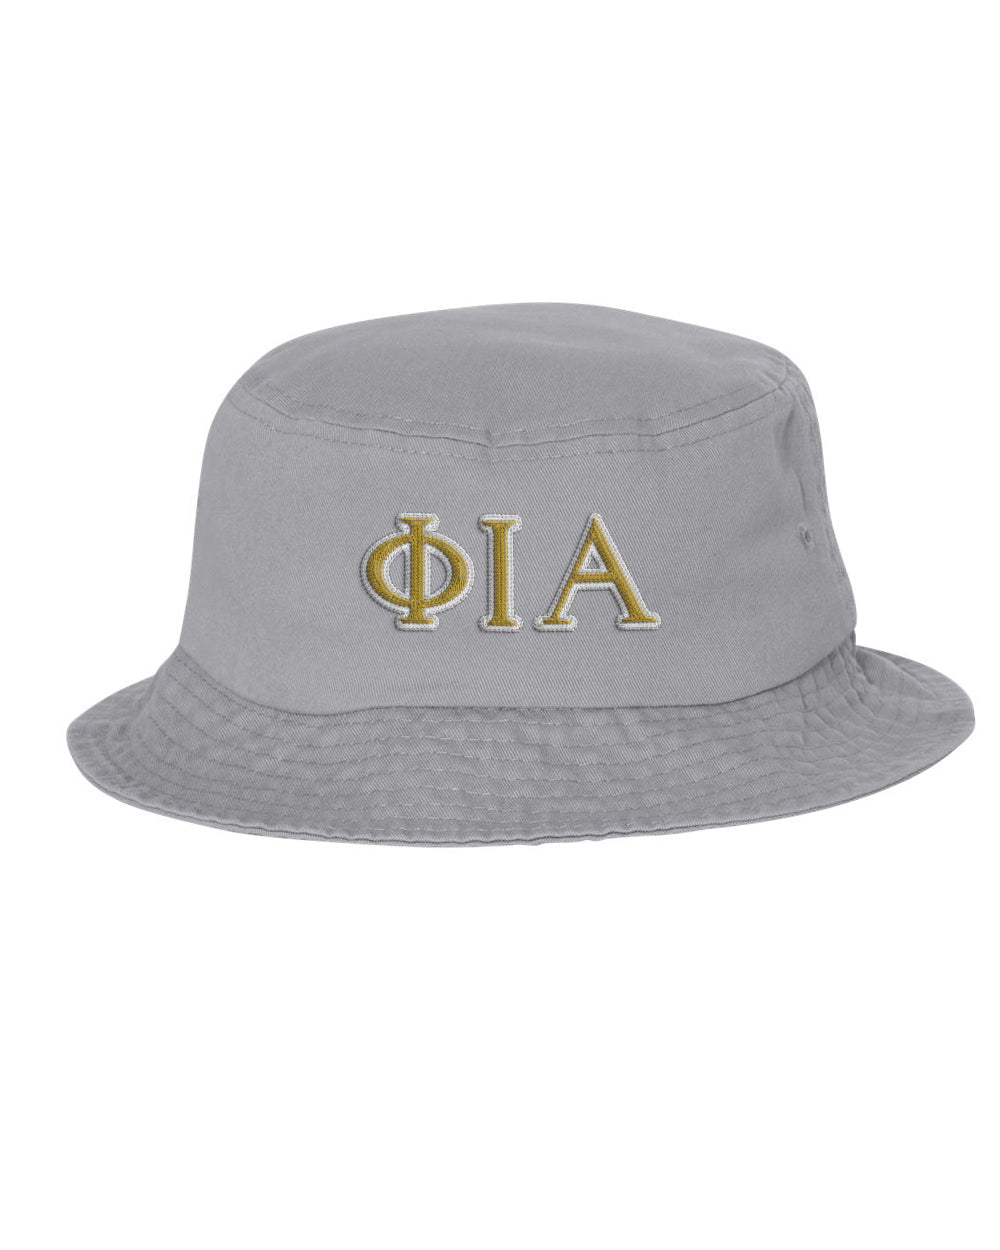 Phi Iota Alpha Embroidered Bucket Hat